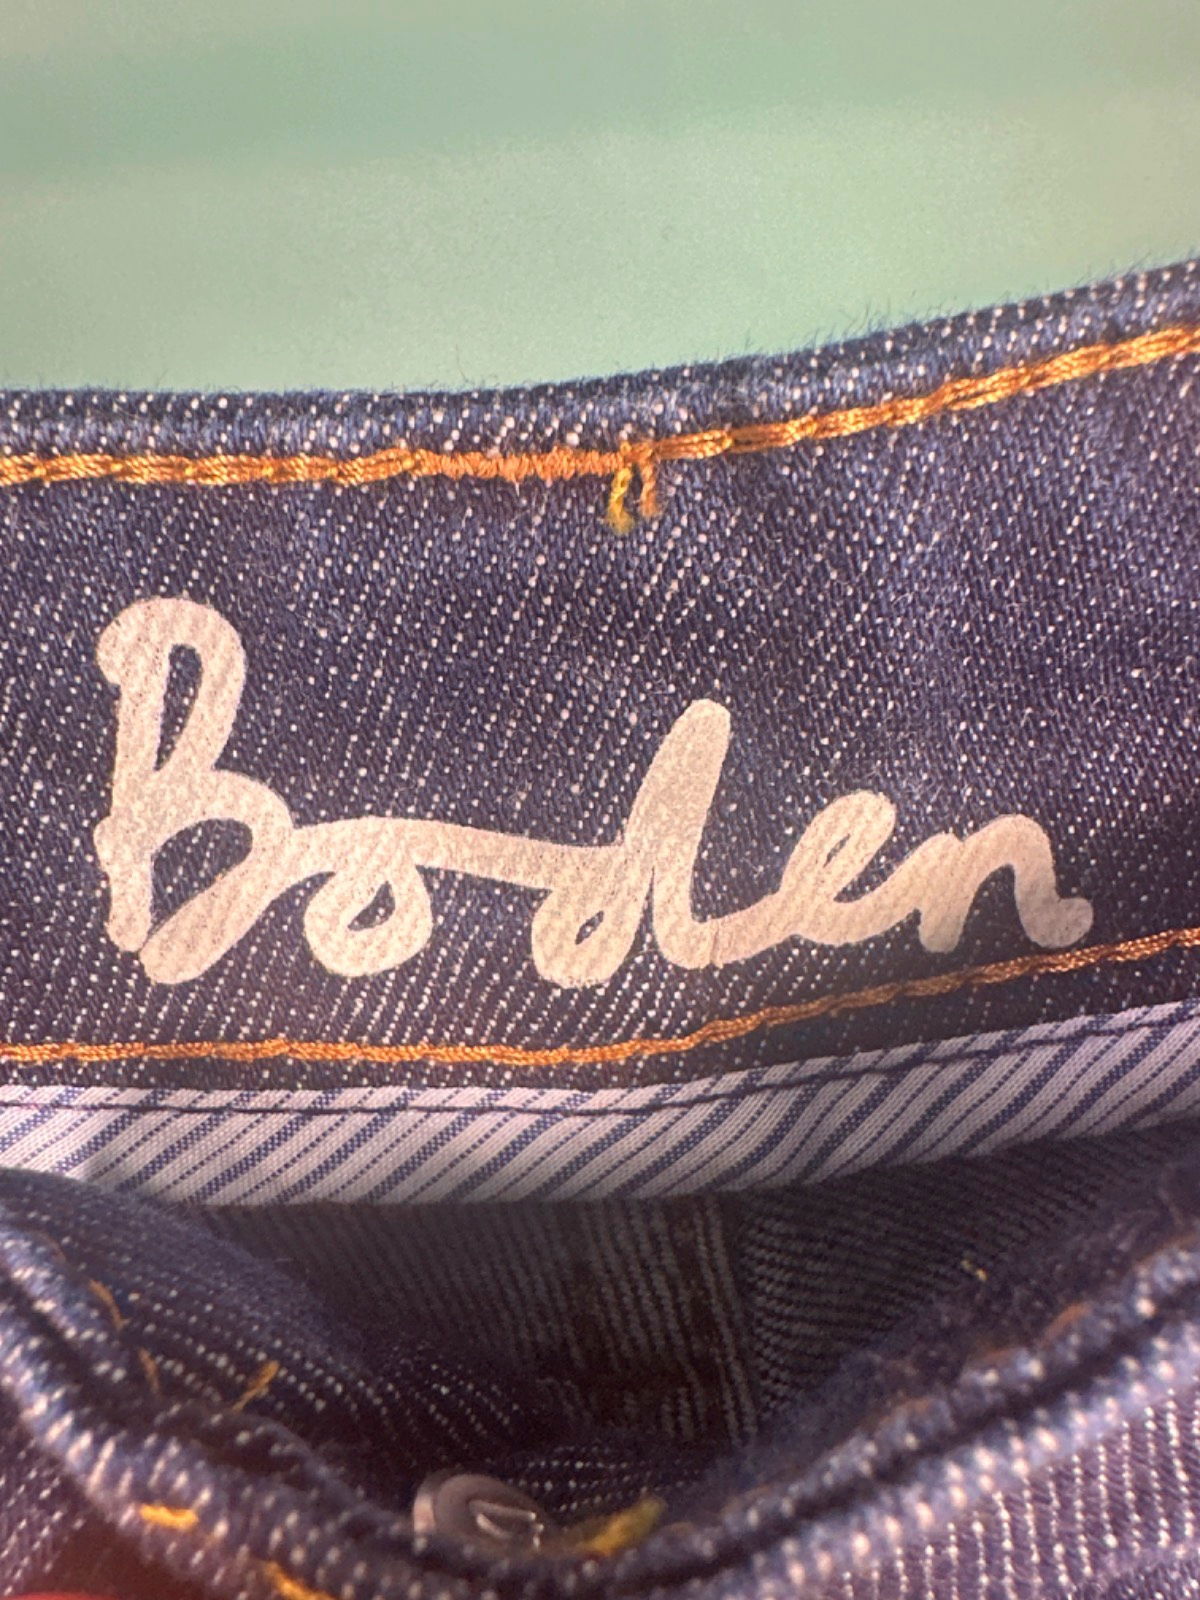 Boden Blue Bootcut Jeans 6R